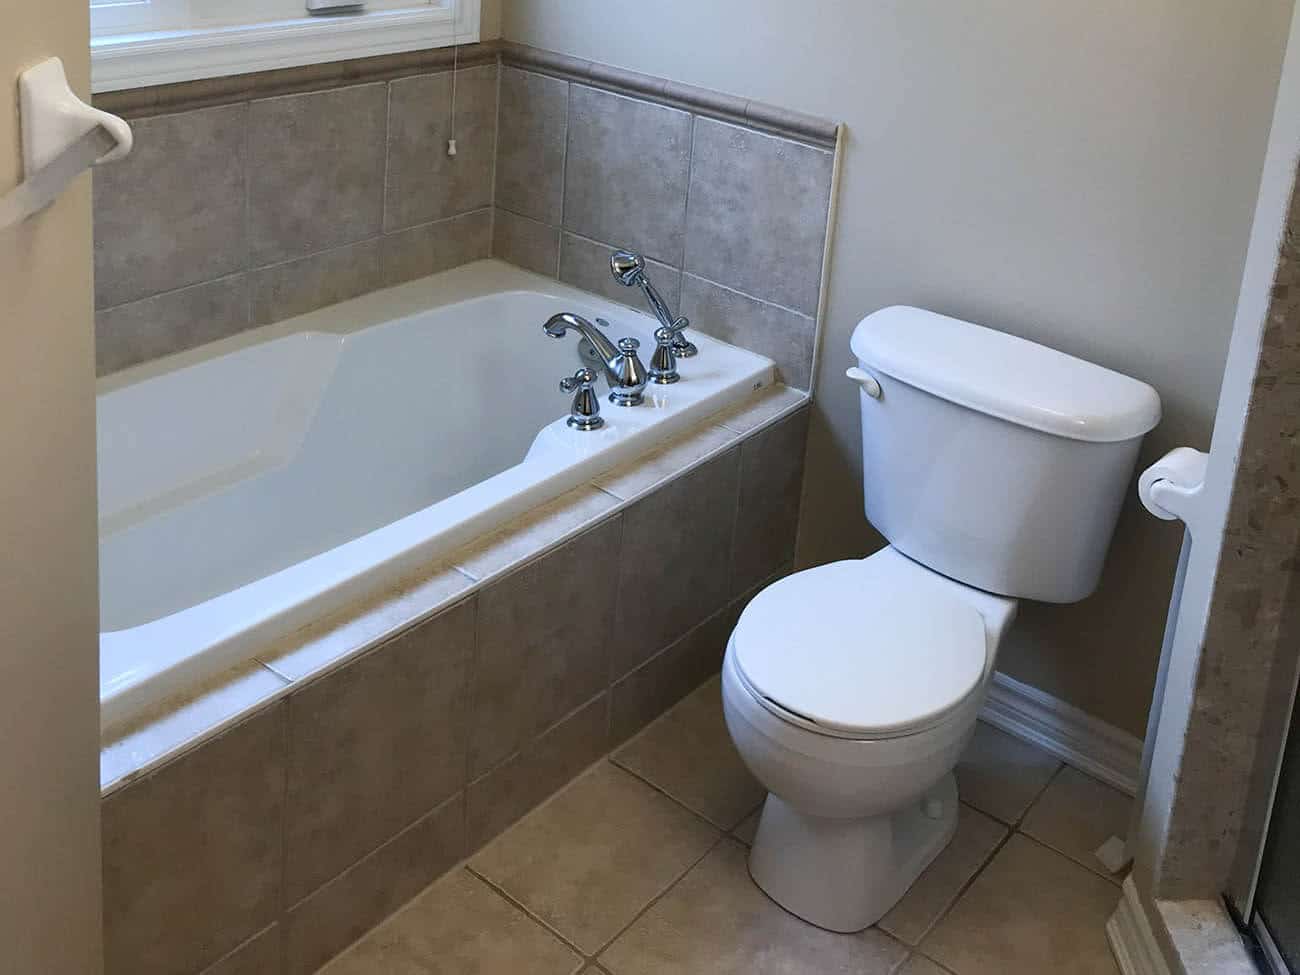 Clogged bathroom tub with toilet